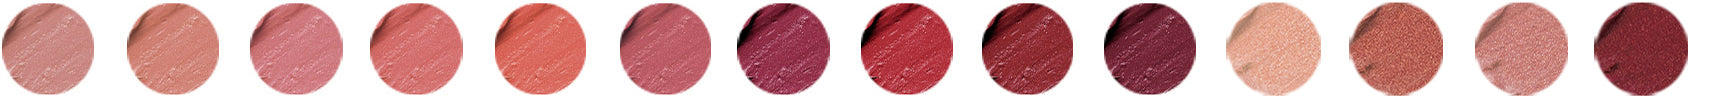 Moisture Shine Lipstick group image